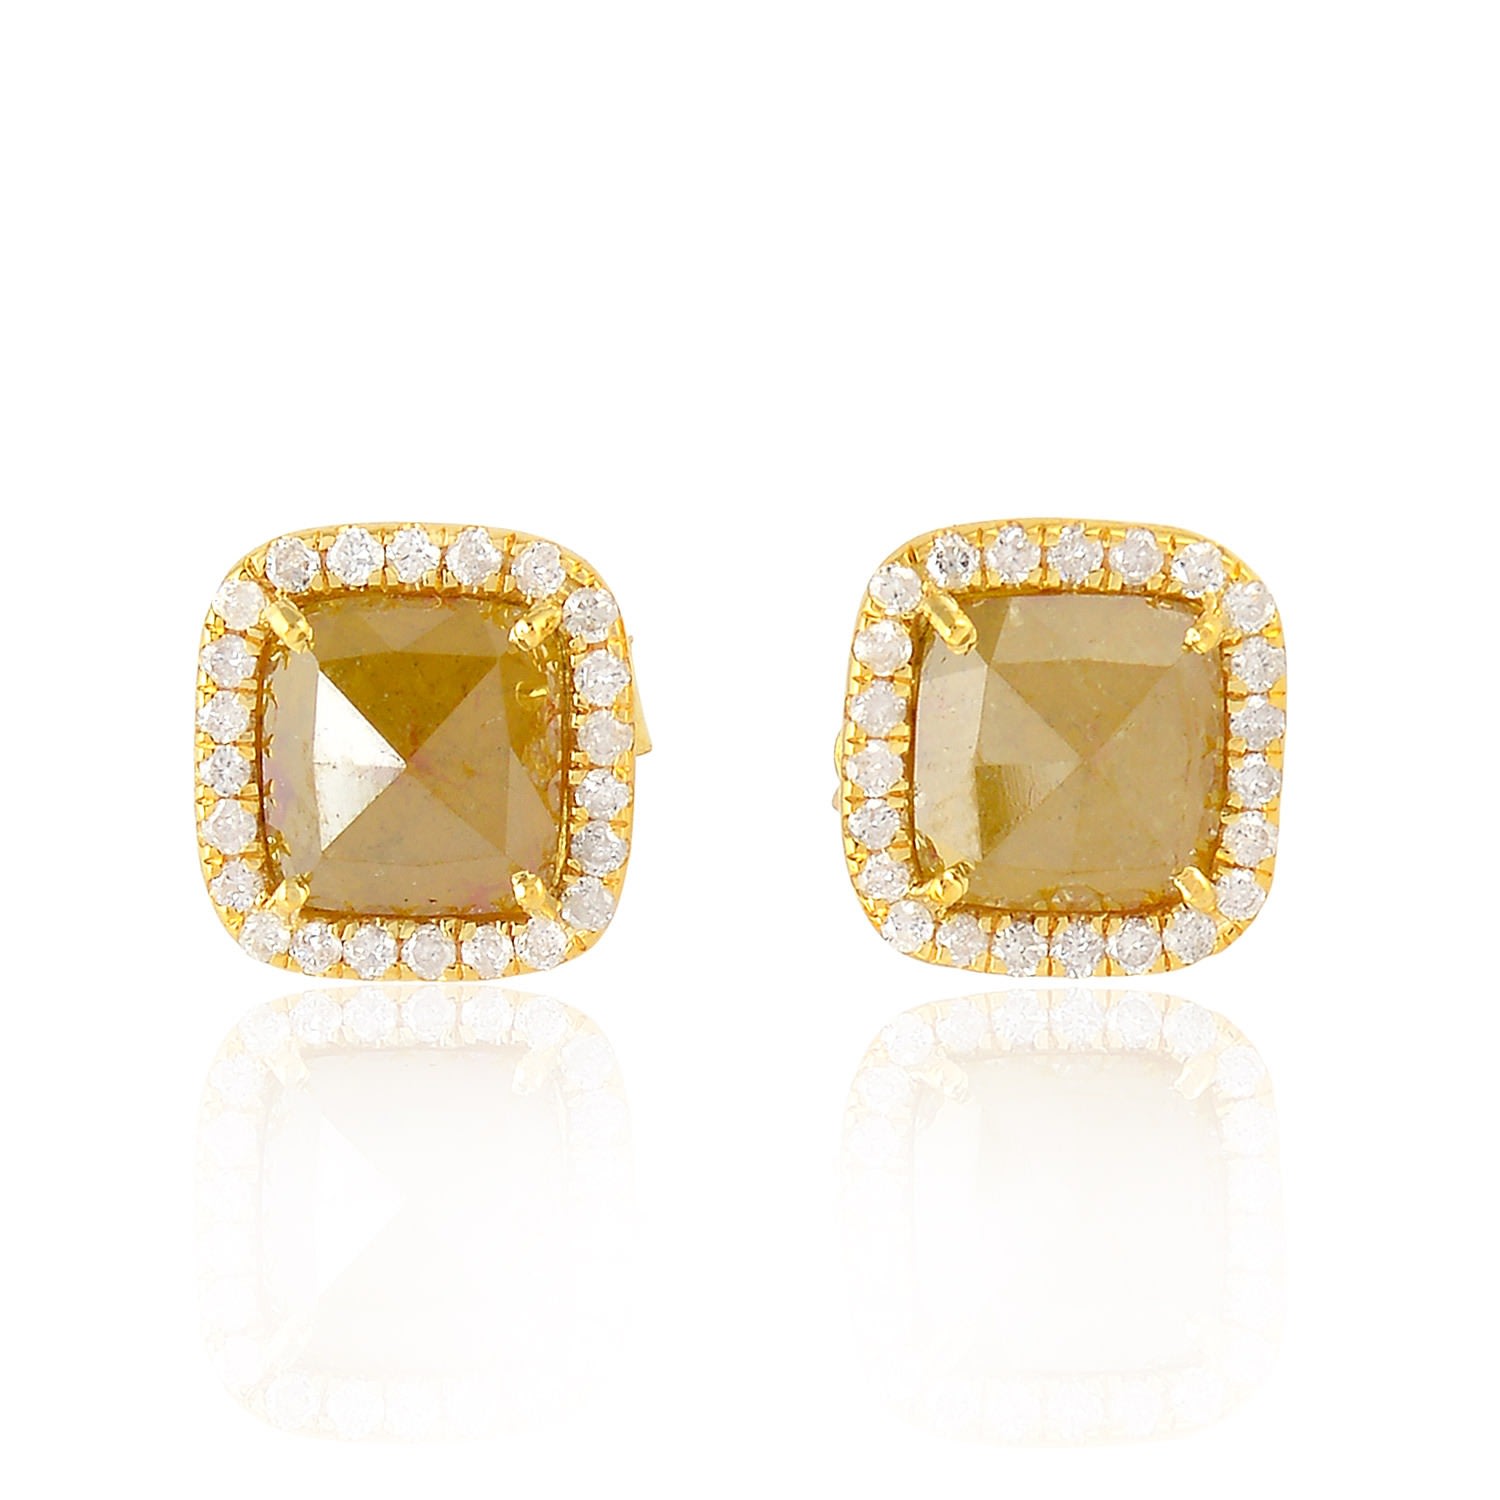 Artisan Women's White / Yellow / Orange Diamond 18k Solid Gold Square Shape Stud Earrings Jewelry